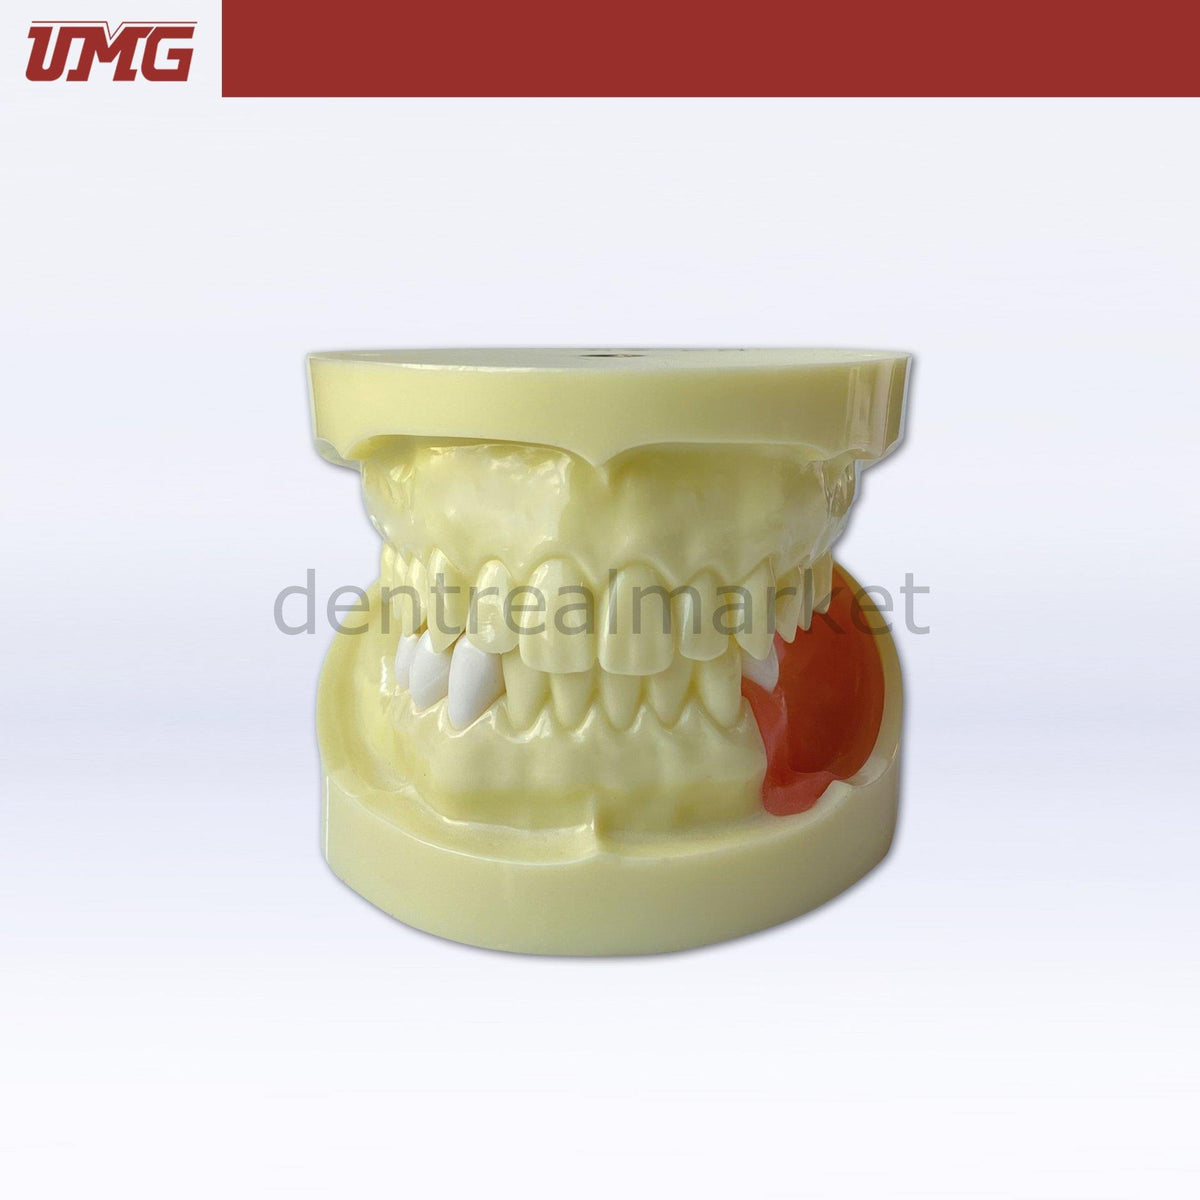 DentrealStore - Umg Dental Umg Model Implant Training Model Upper-Lower Jaw - UM-Z4